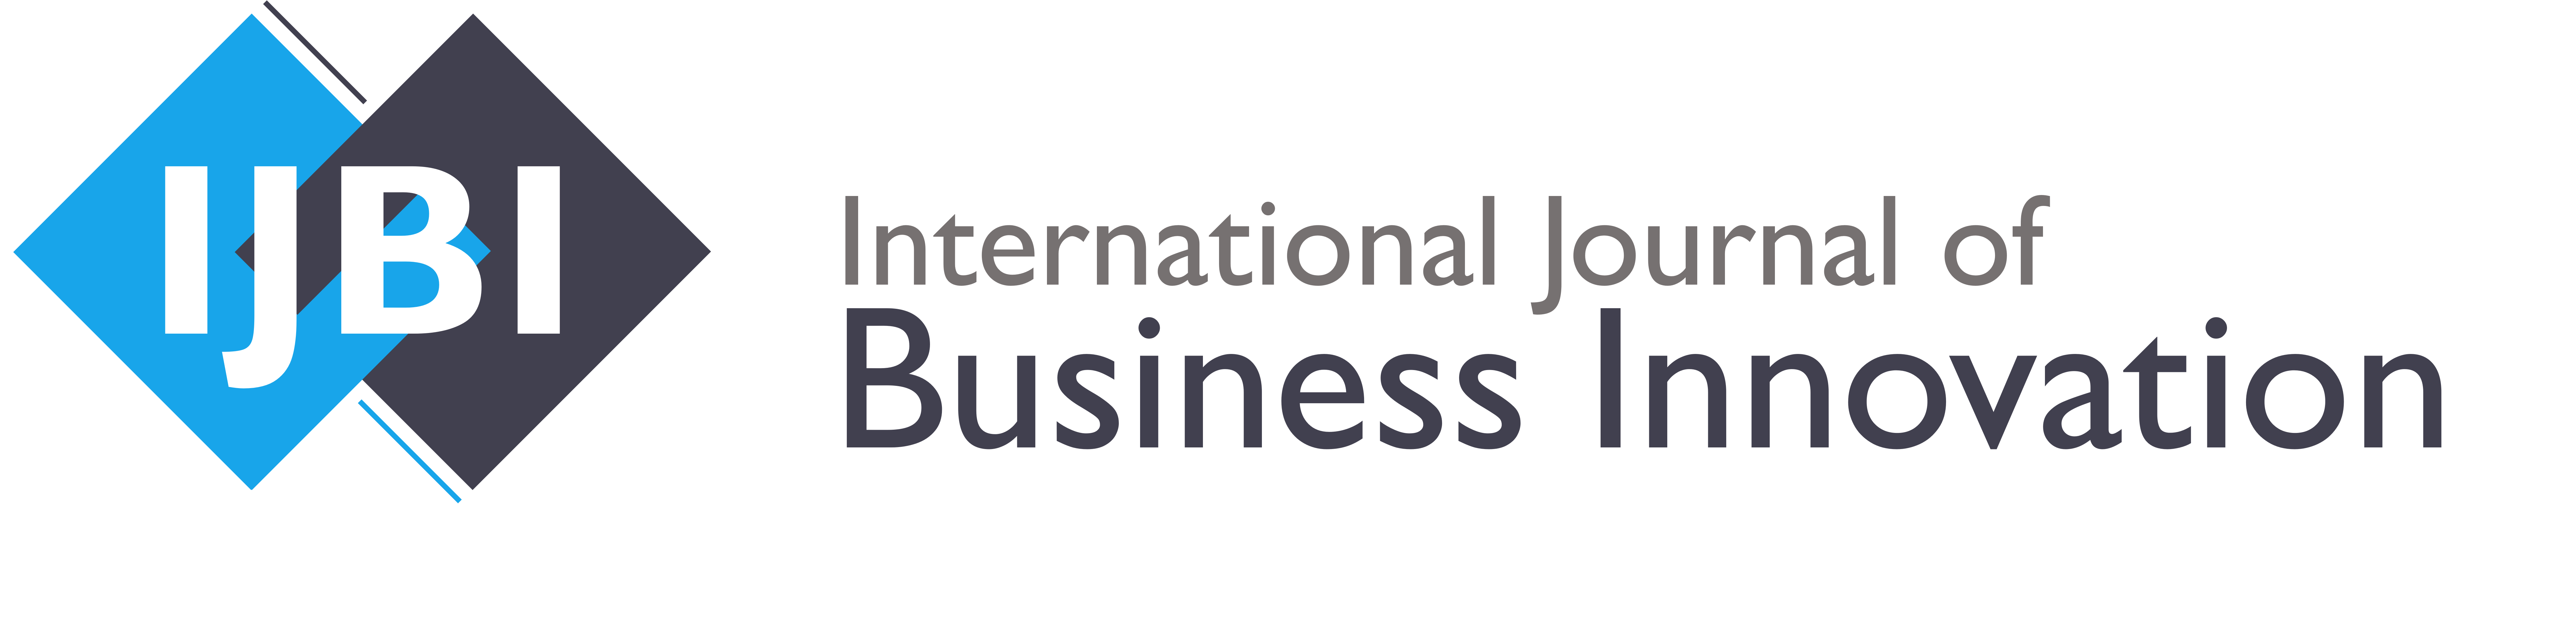 IJBI International Journal of Business Innovation